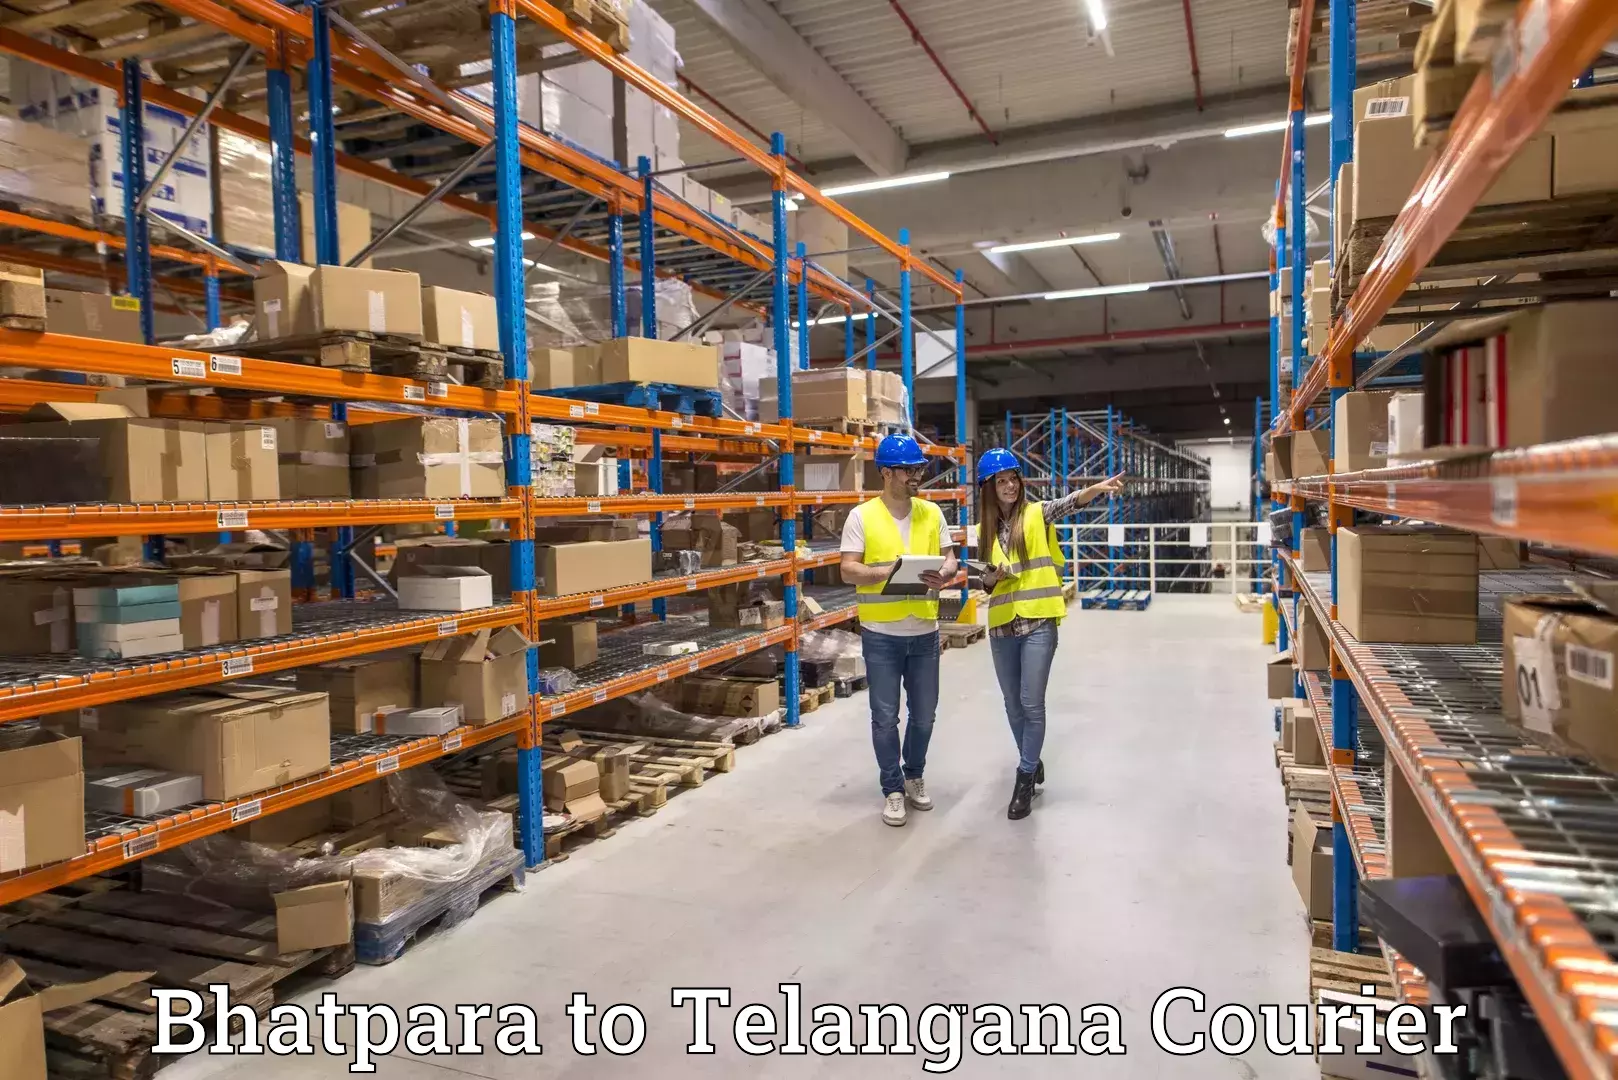 High-performance logistics Bhatpara to Sultanabad